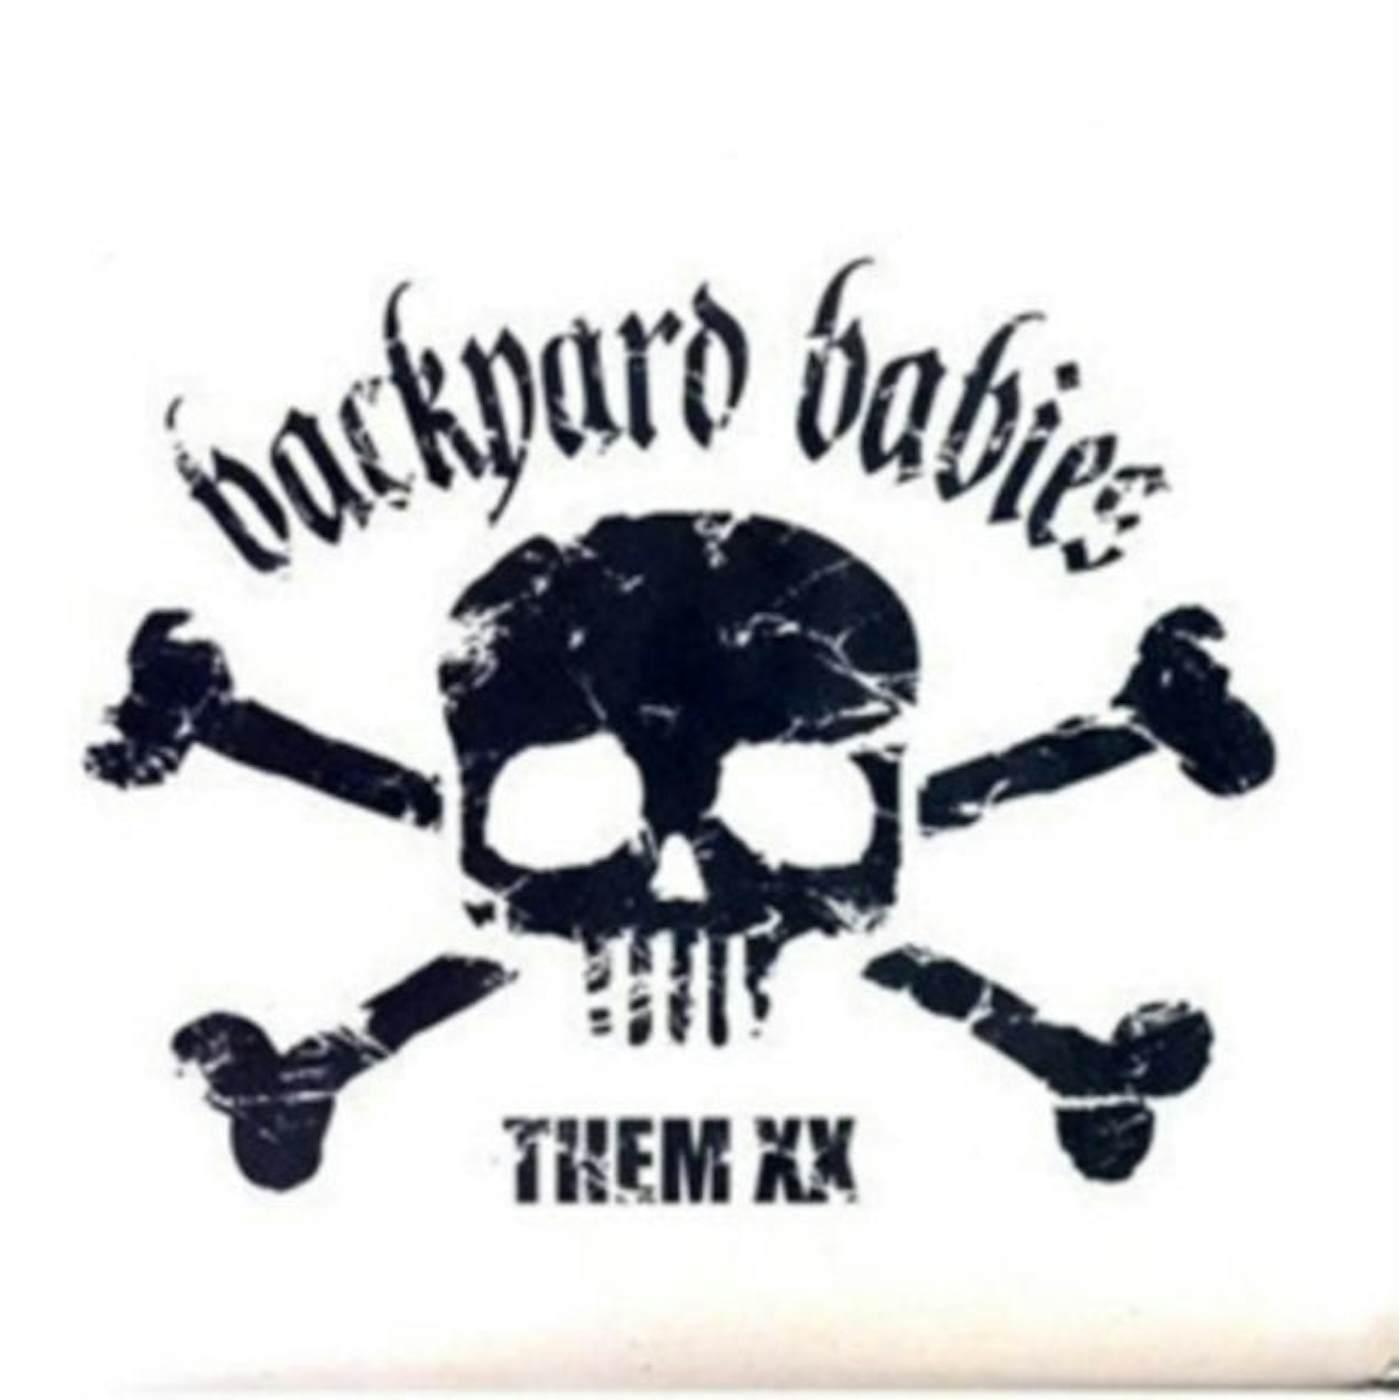 Backyard Babies CD - Them Xx